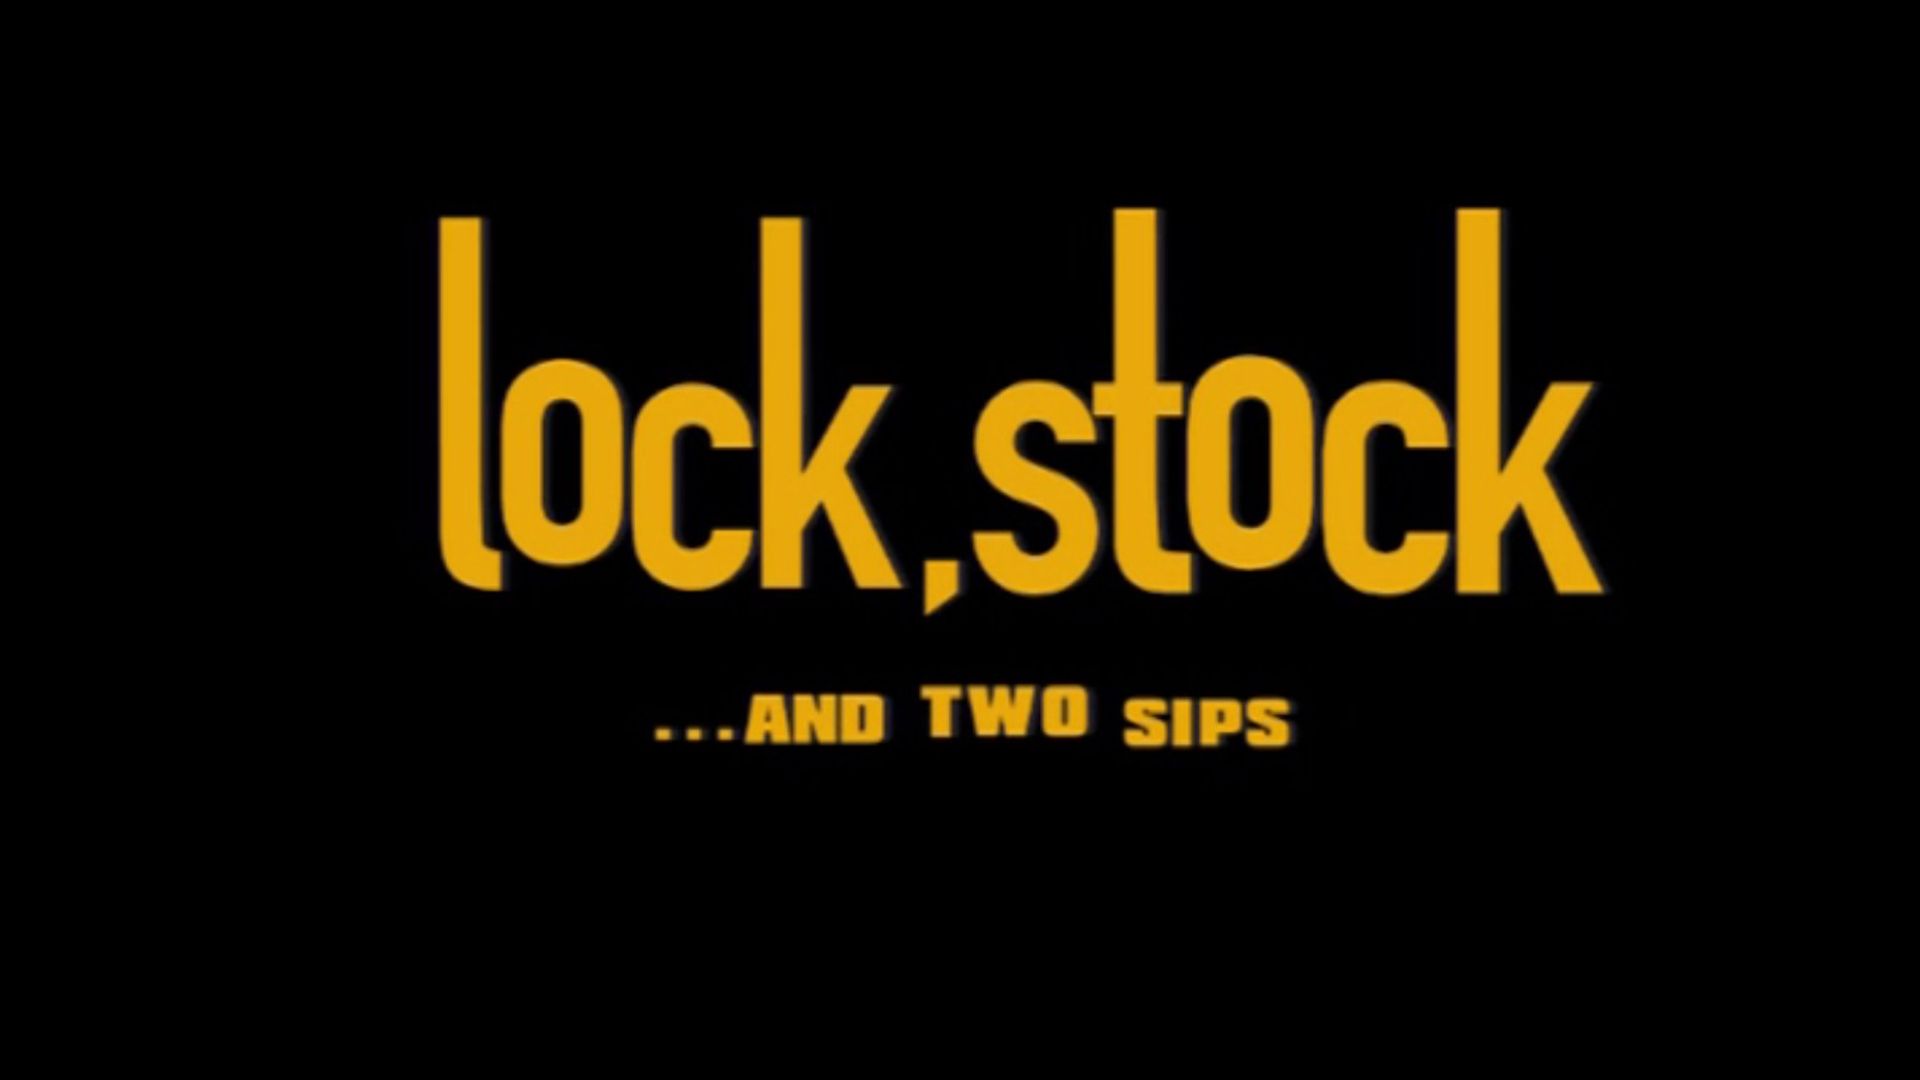 Lock, Stock... background